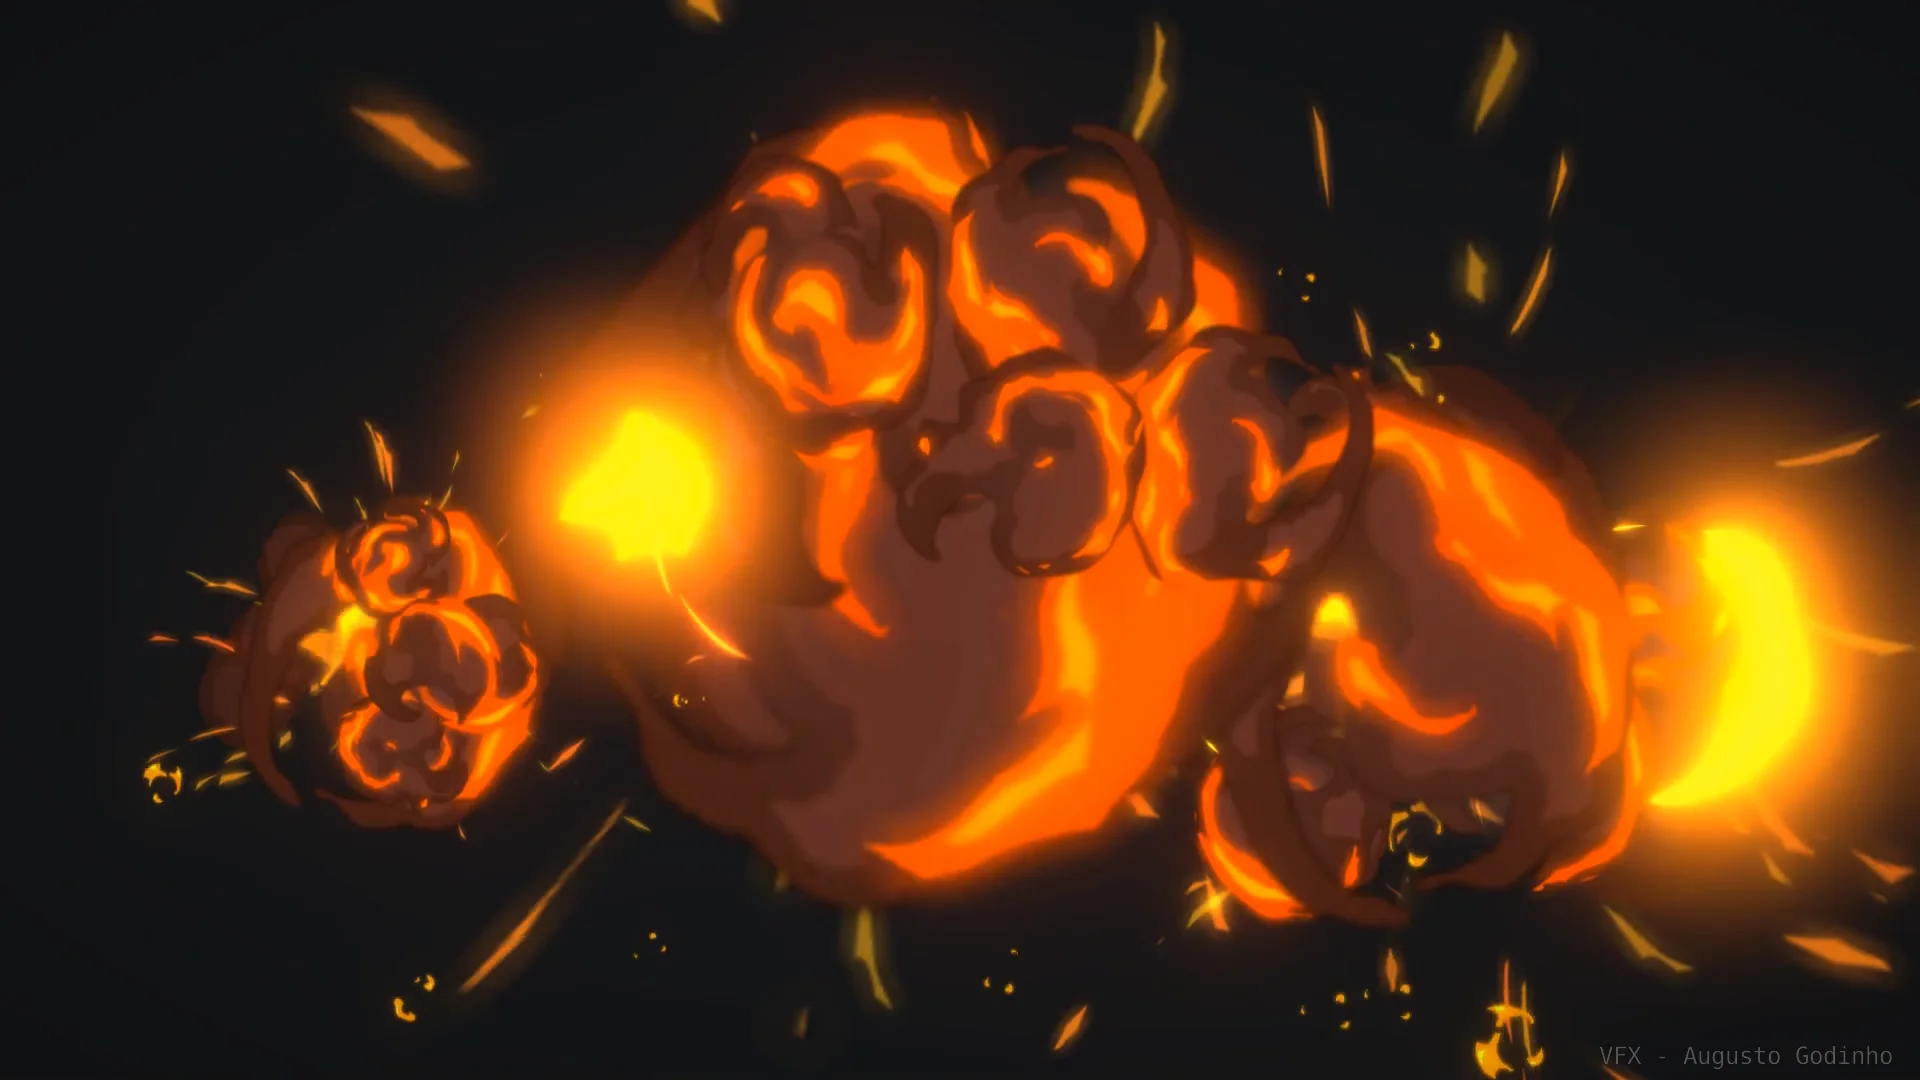 FCPX Anime Fire 4K - Drag & Drop.mov on Vimeo